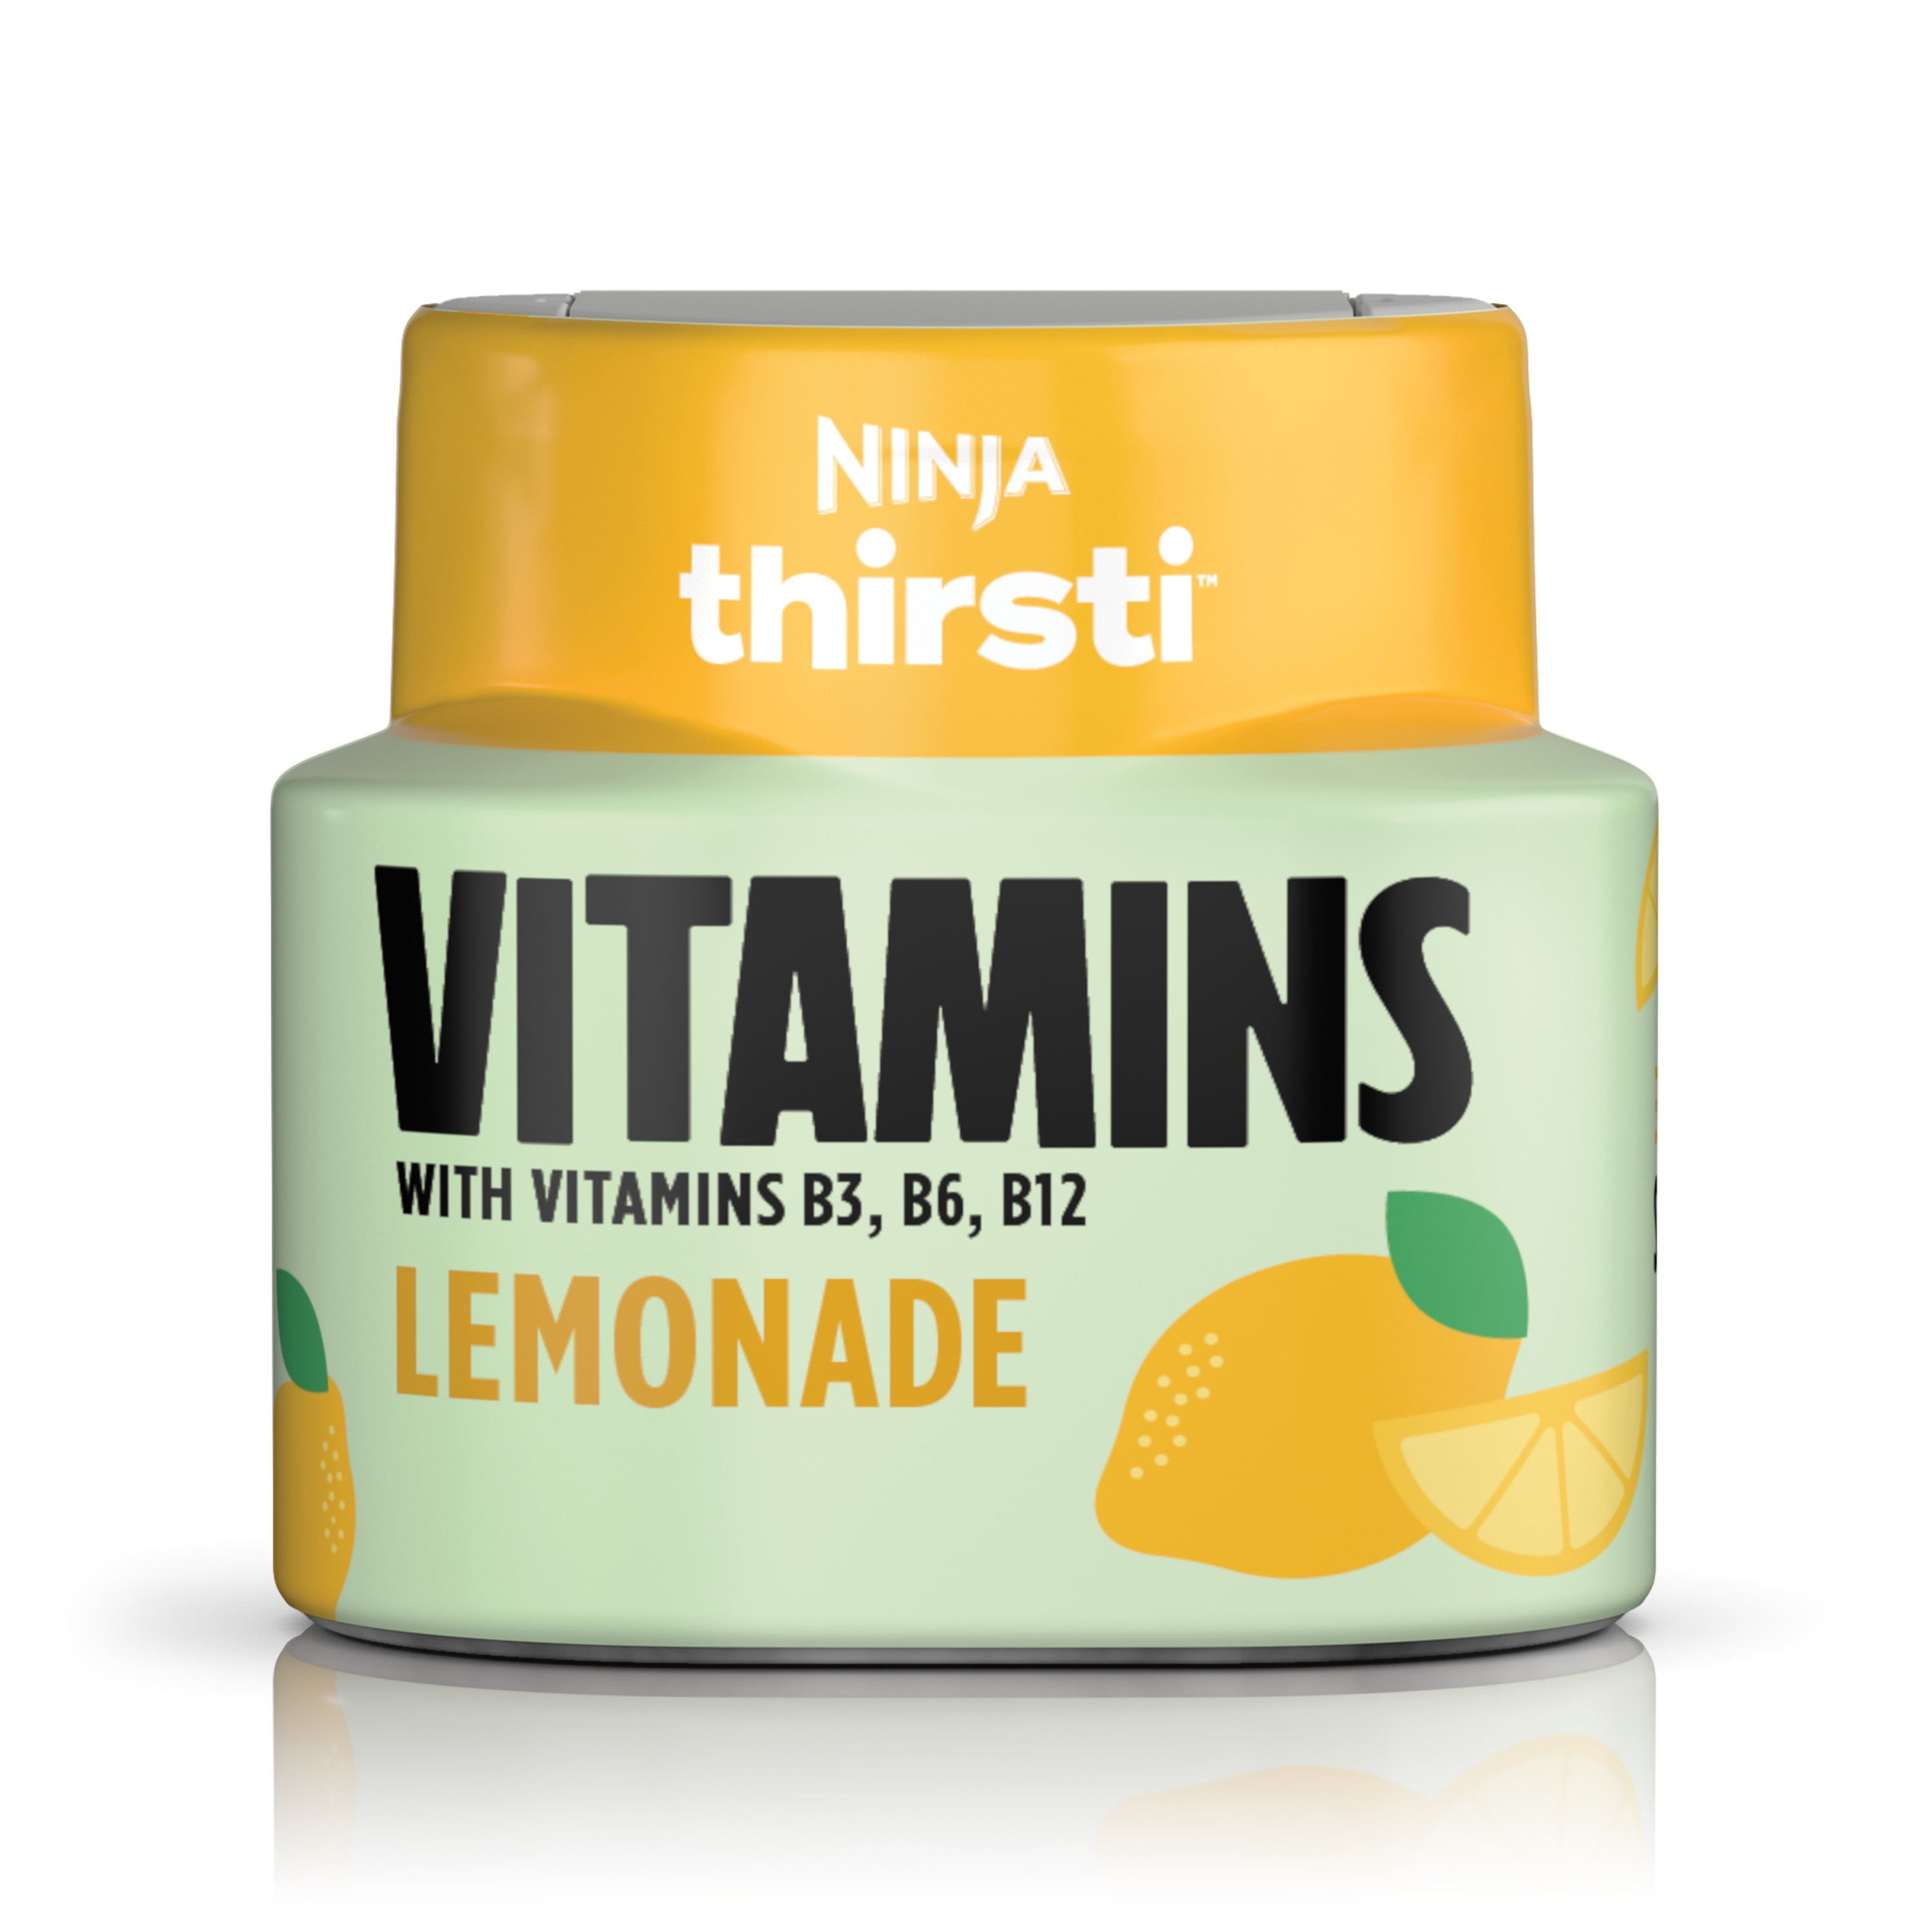 Ninja Thirsti Flavored Water Drops, Hydrate With Electrolytes, Coconut  Pineapple, 3 Pack, Zero Calories, Zero Sugar, 2.23 Fl Oz, Makes 17, 12oz